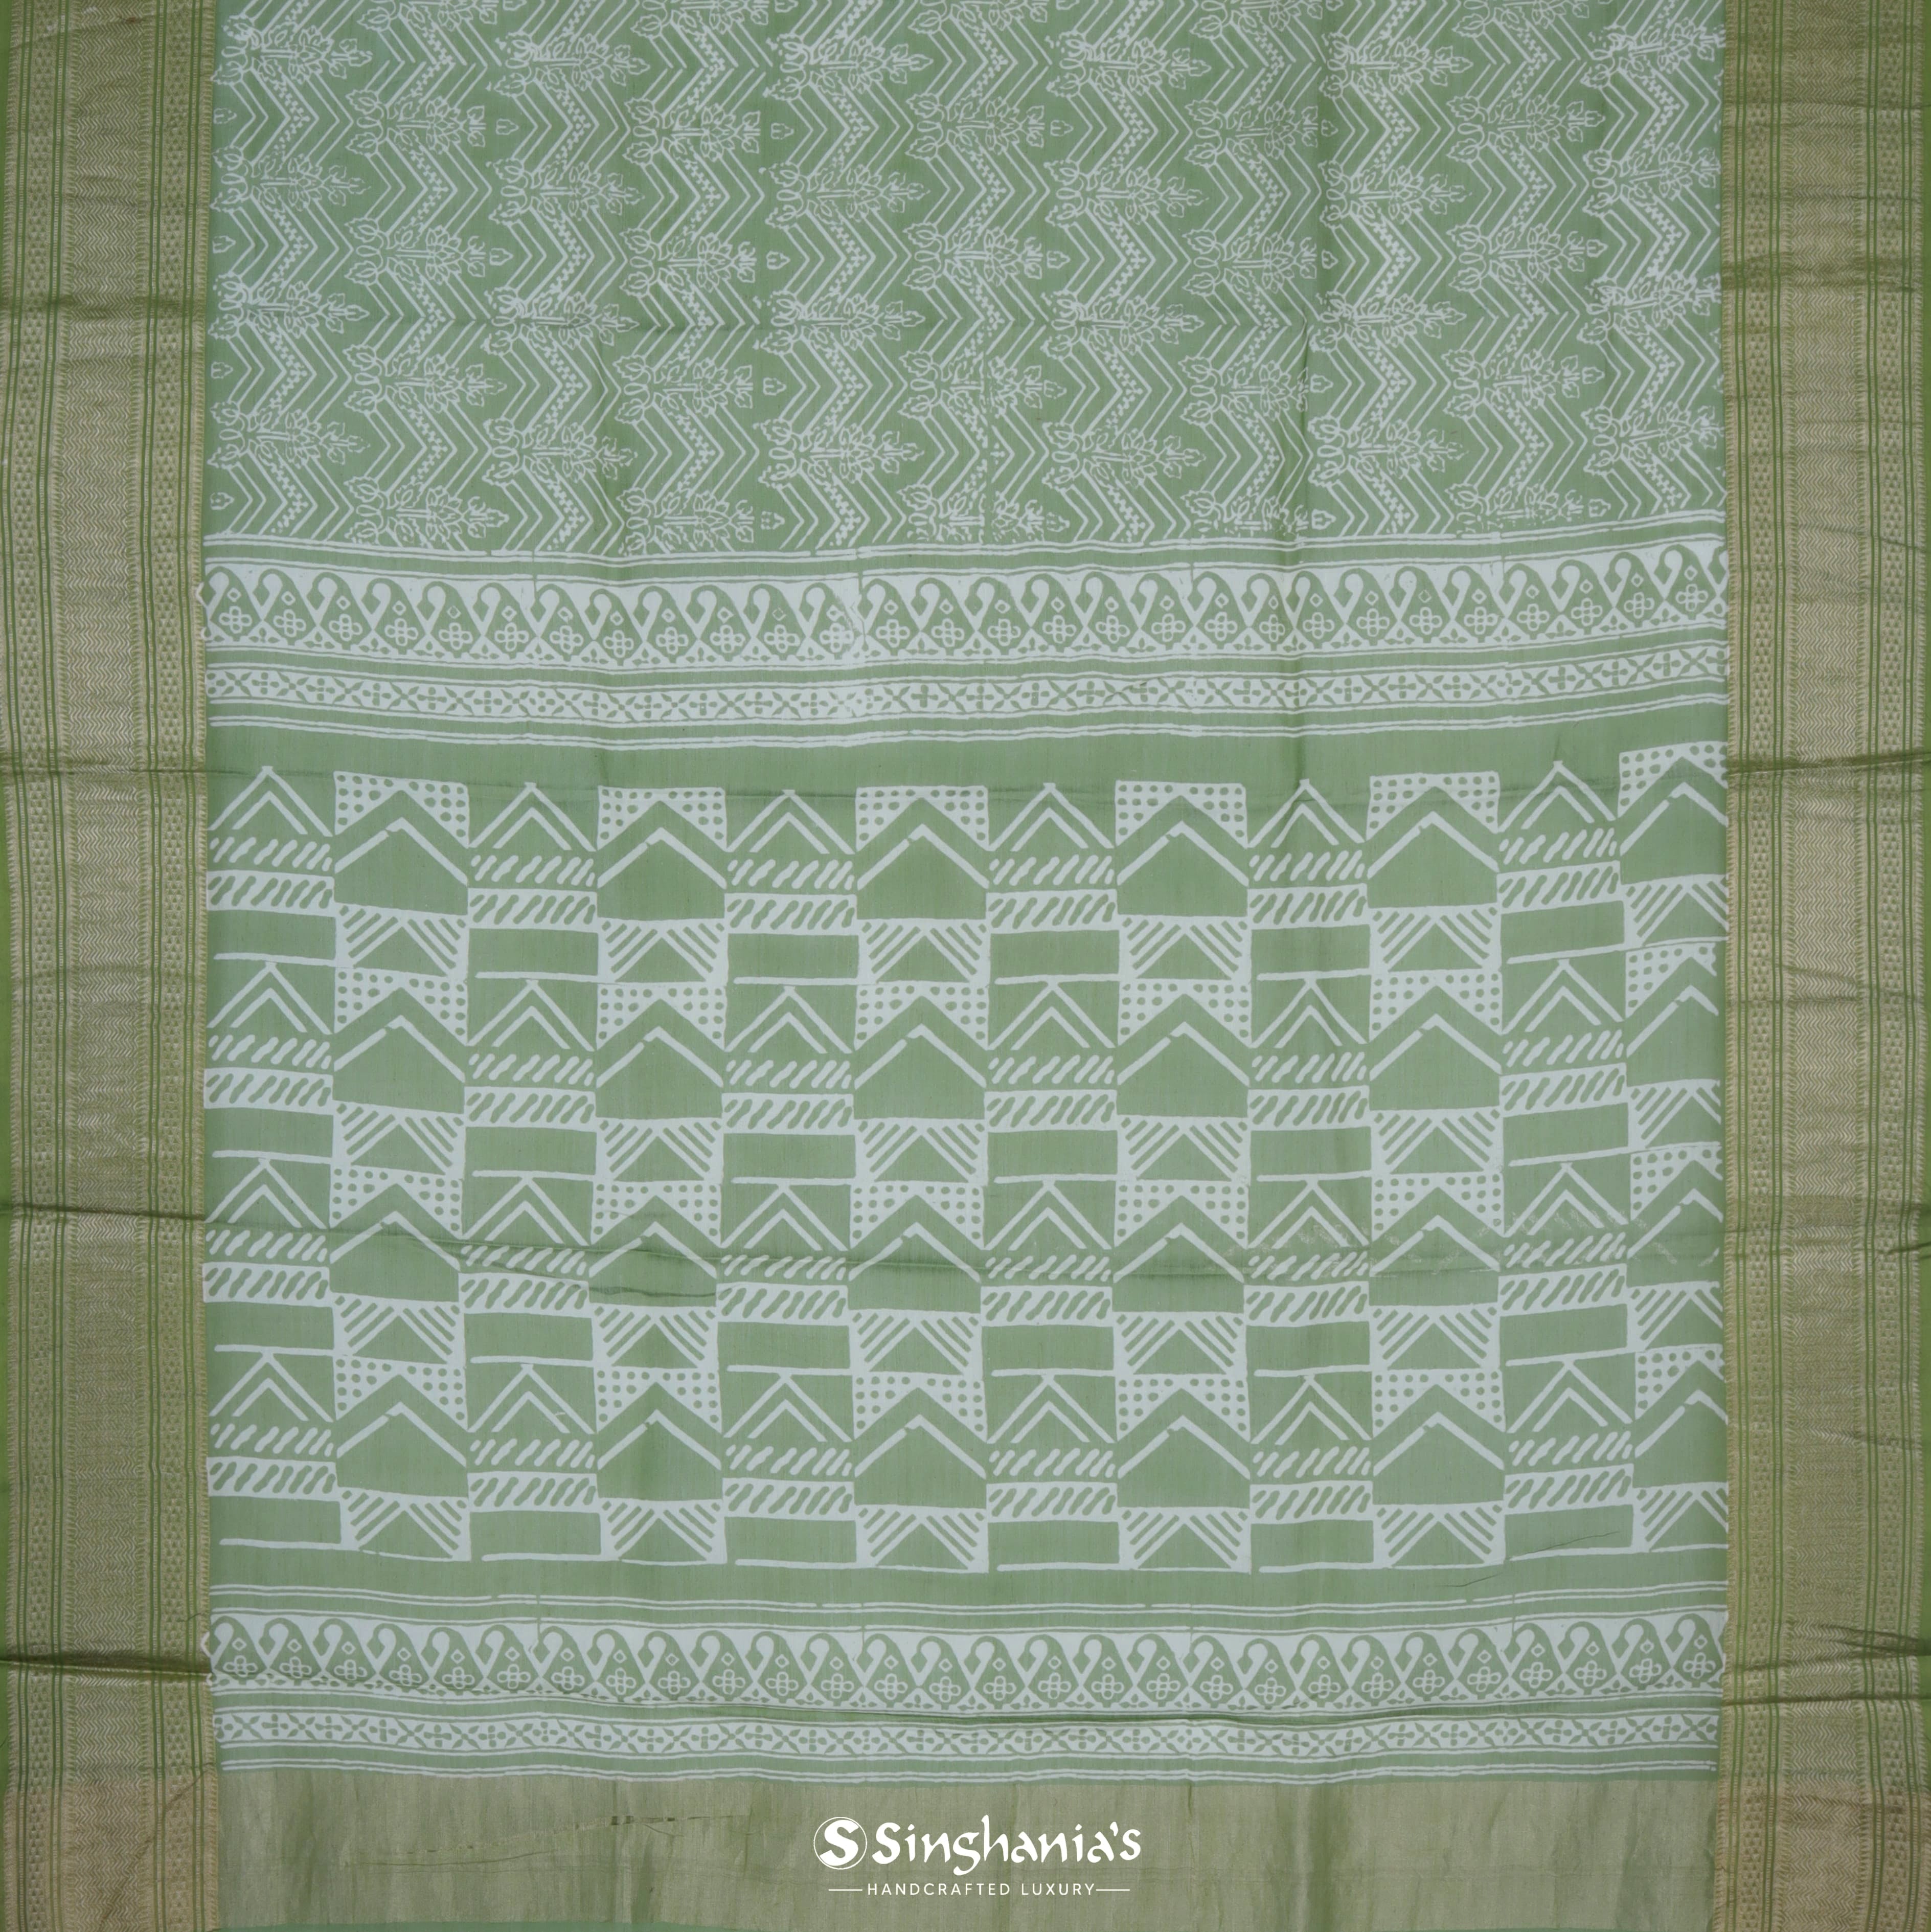 Grass Green Maheshwari Printed Saree With Floral Pattern